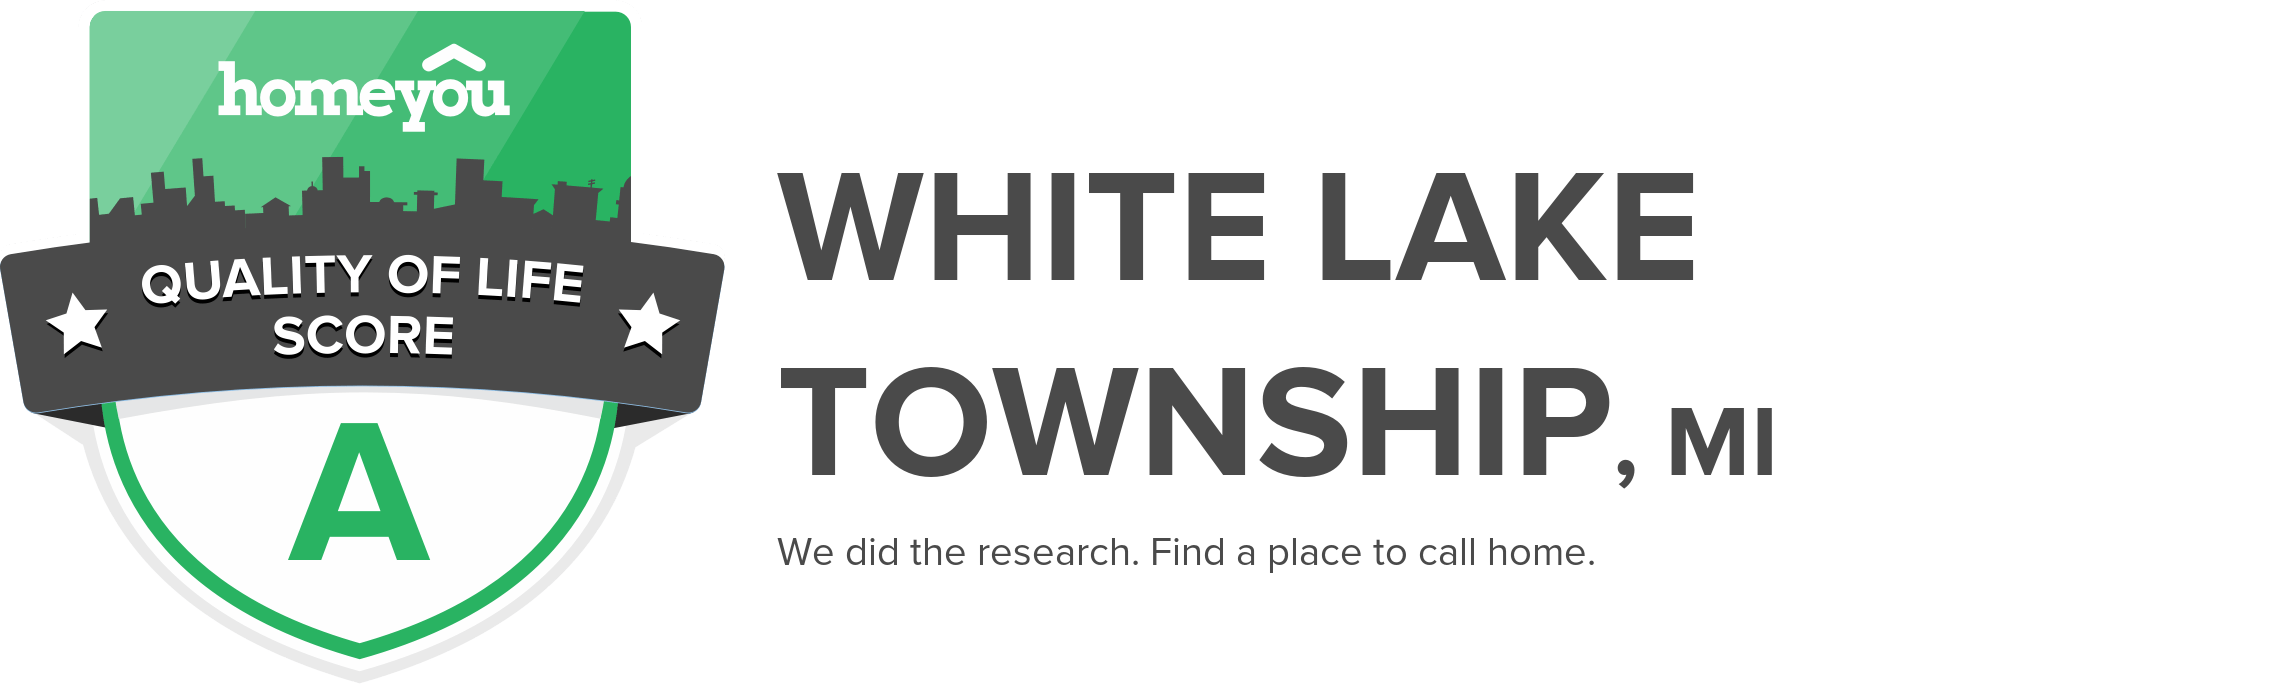 White Lake township, MI